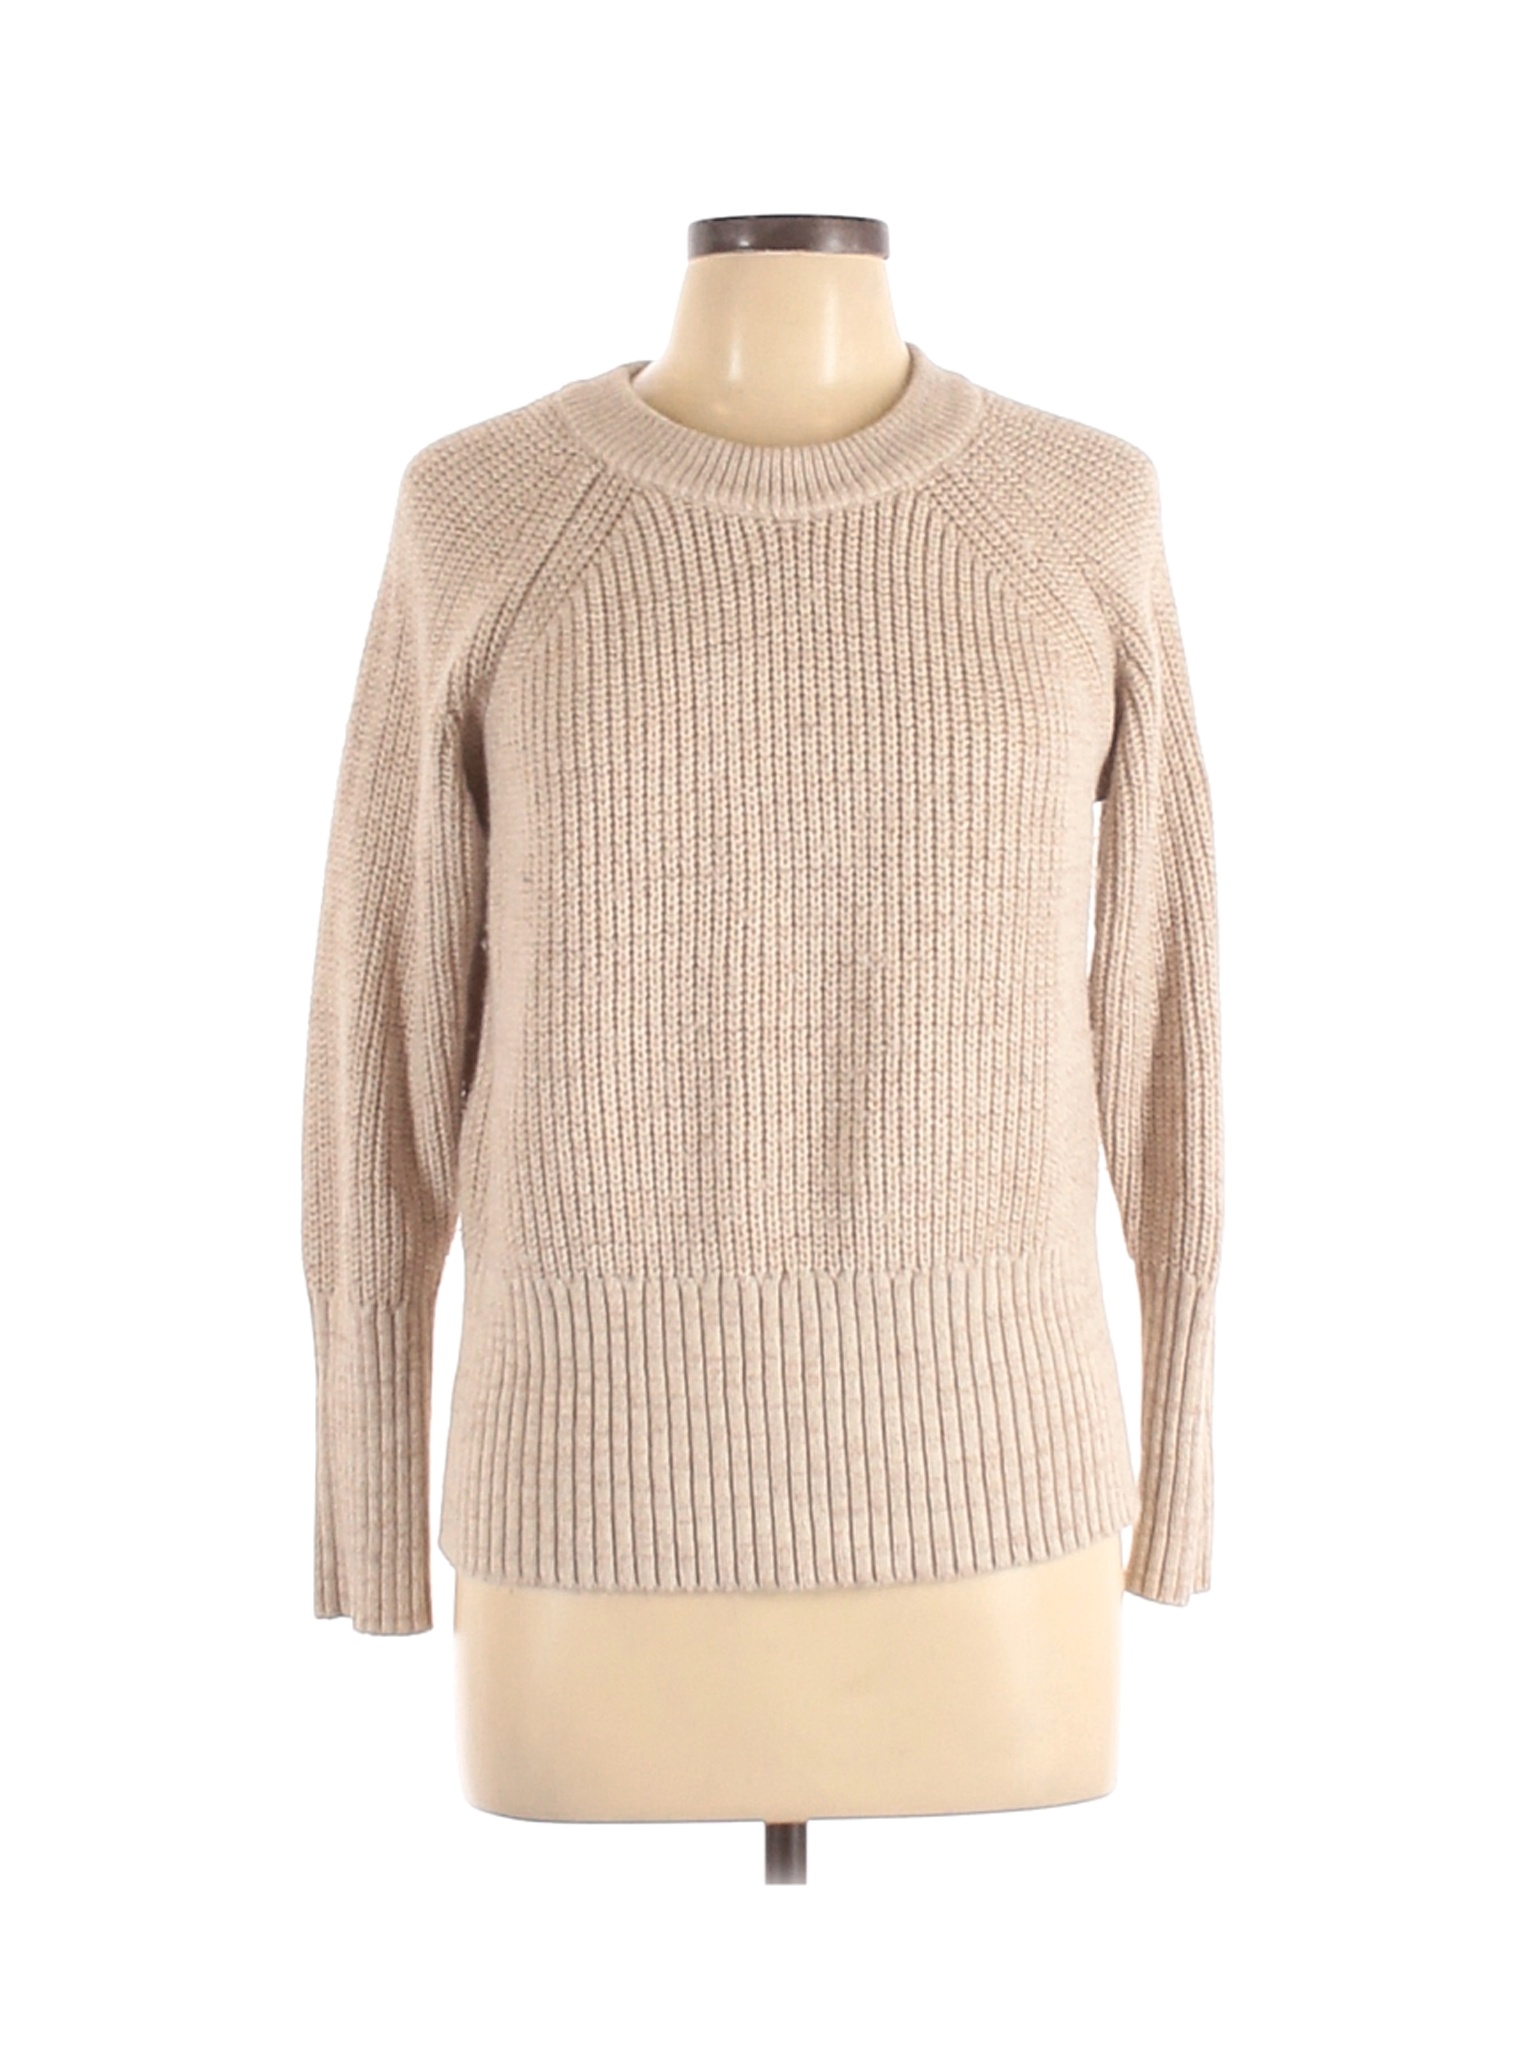 Universal Thread Women Brown Pullover Sweater L | eBay